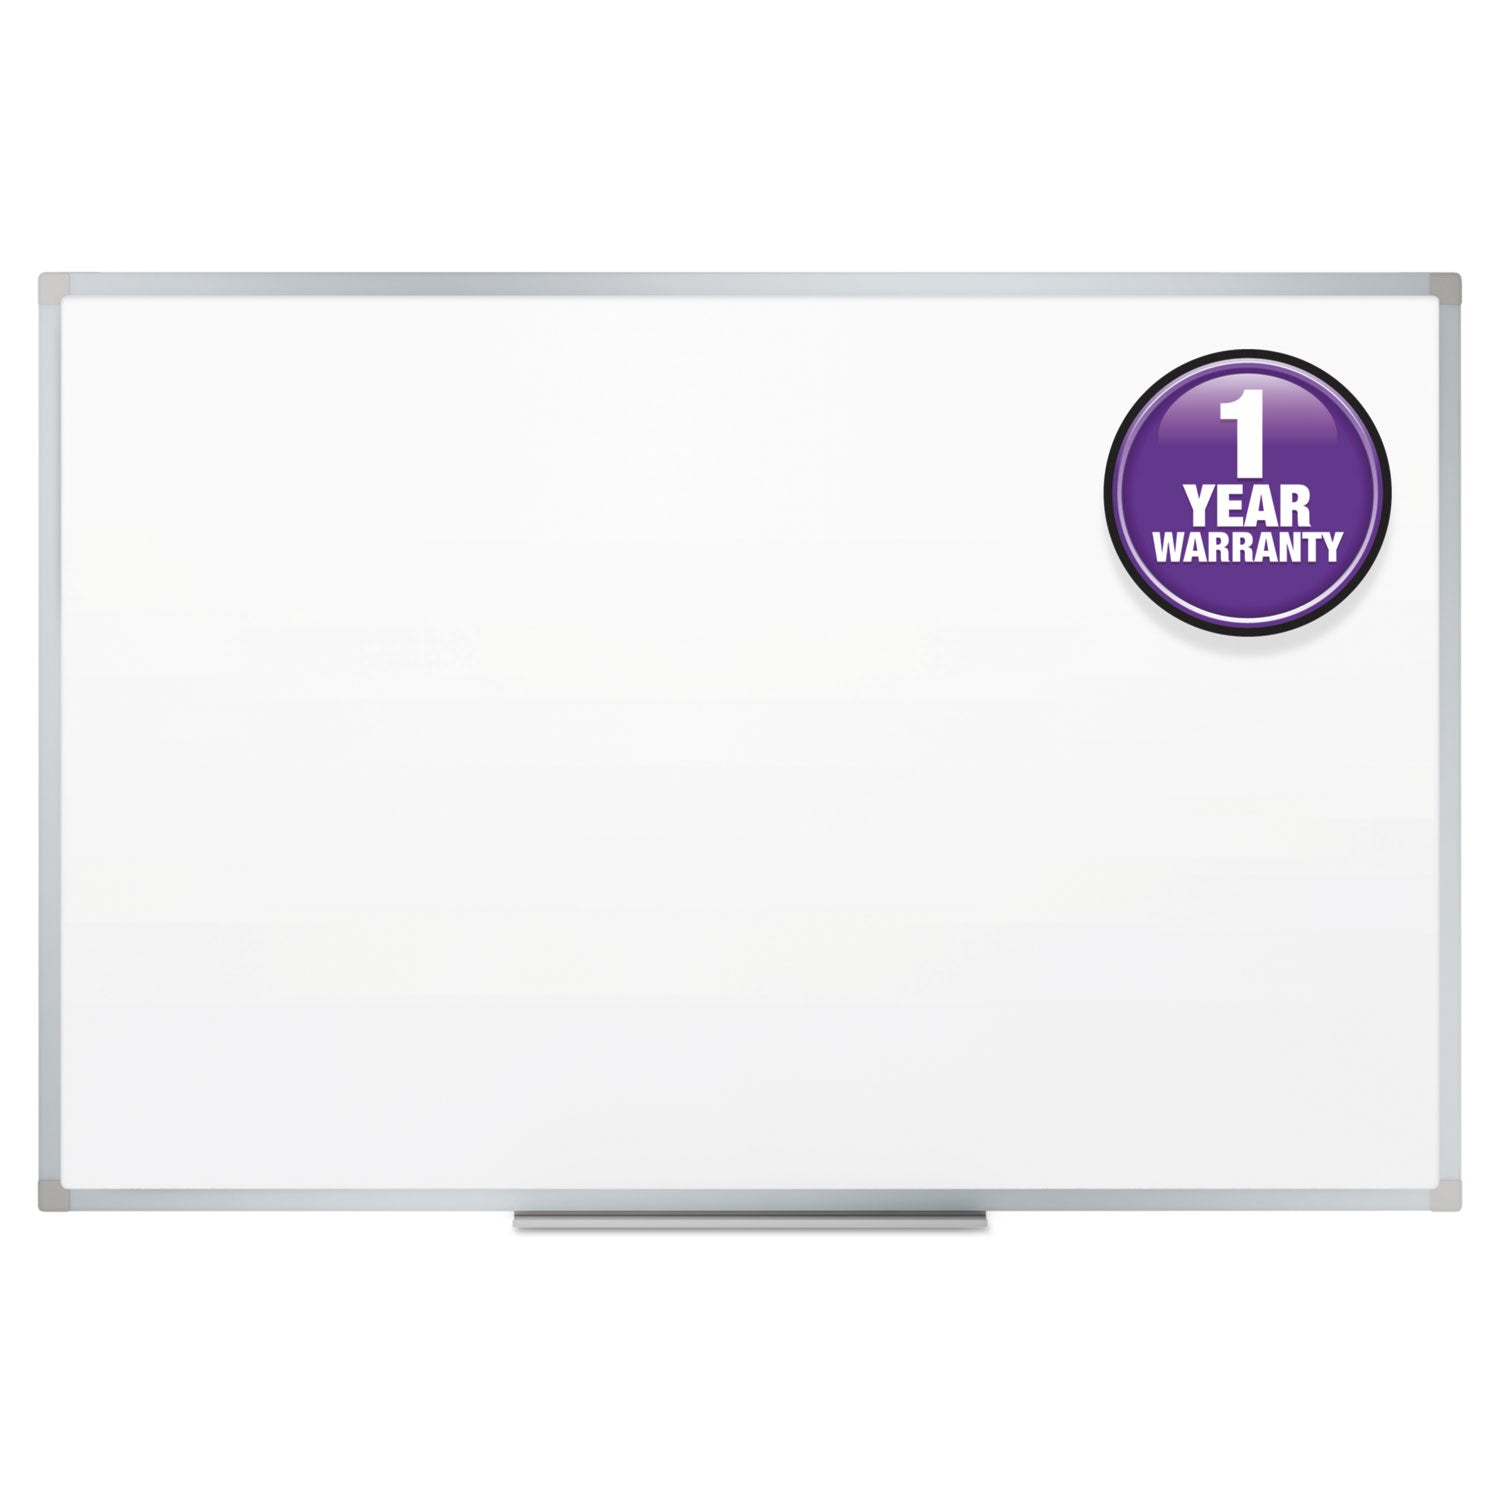 Dry Erase Board with Aluminum Frame, 72 x 48, Melamine White Surface, Silver Aluminum Frame - 